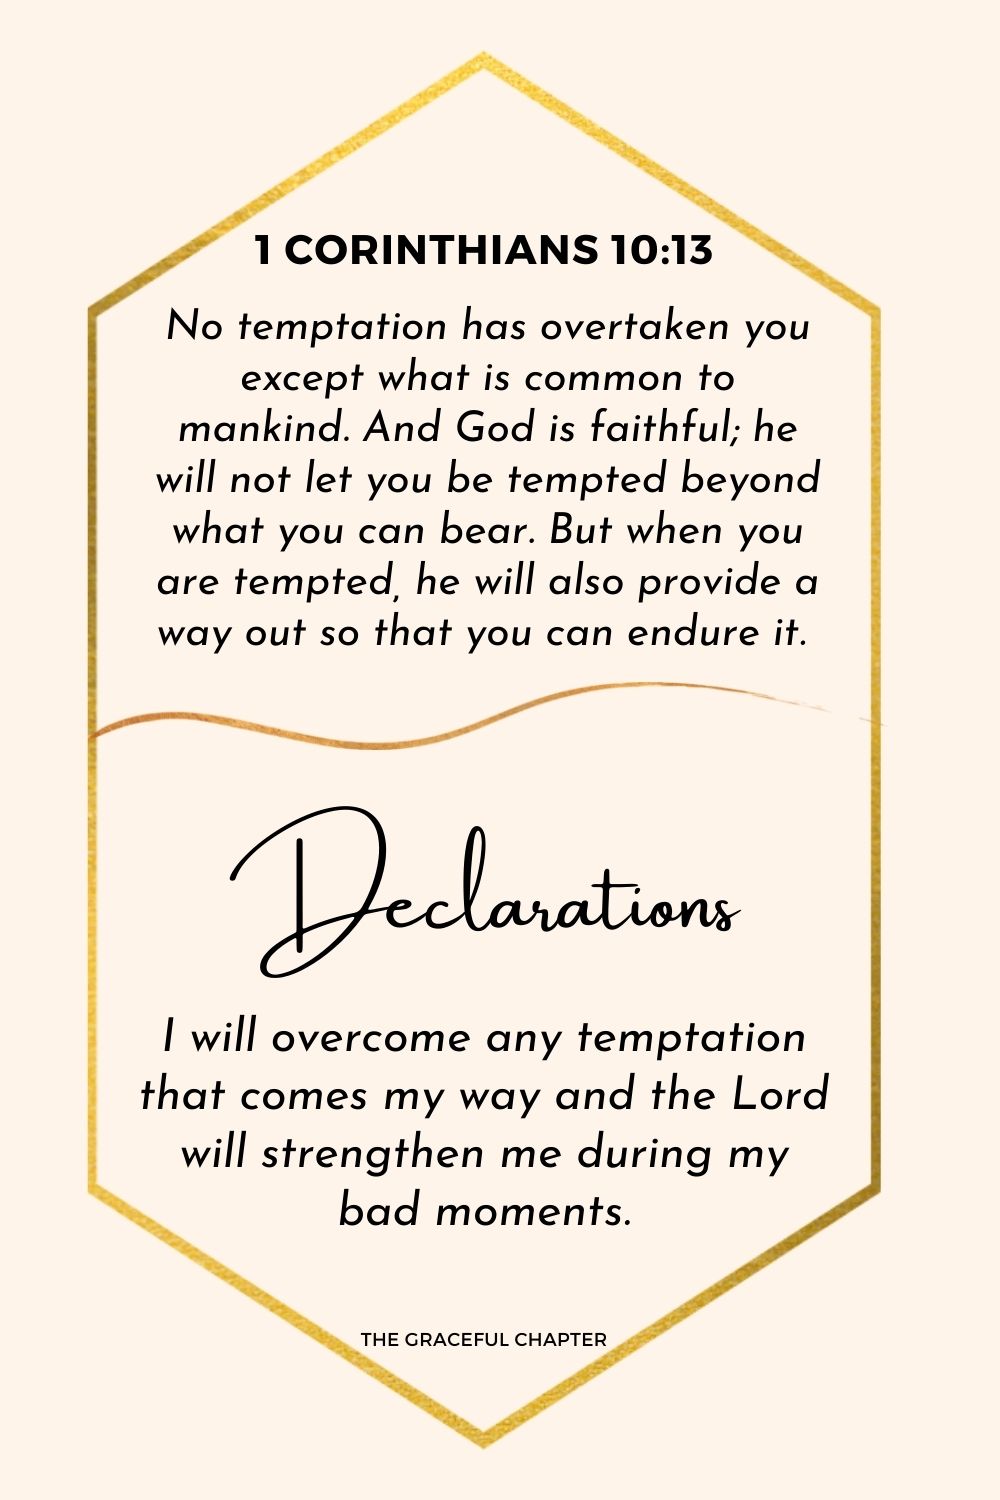 Declaration-1 Corinthians 10:13